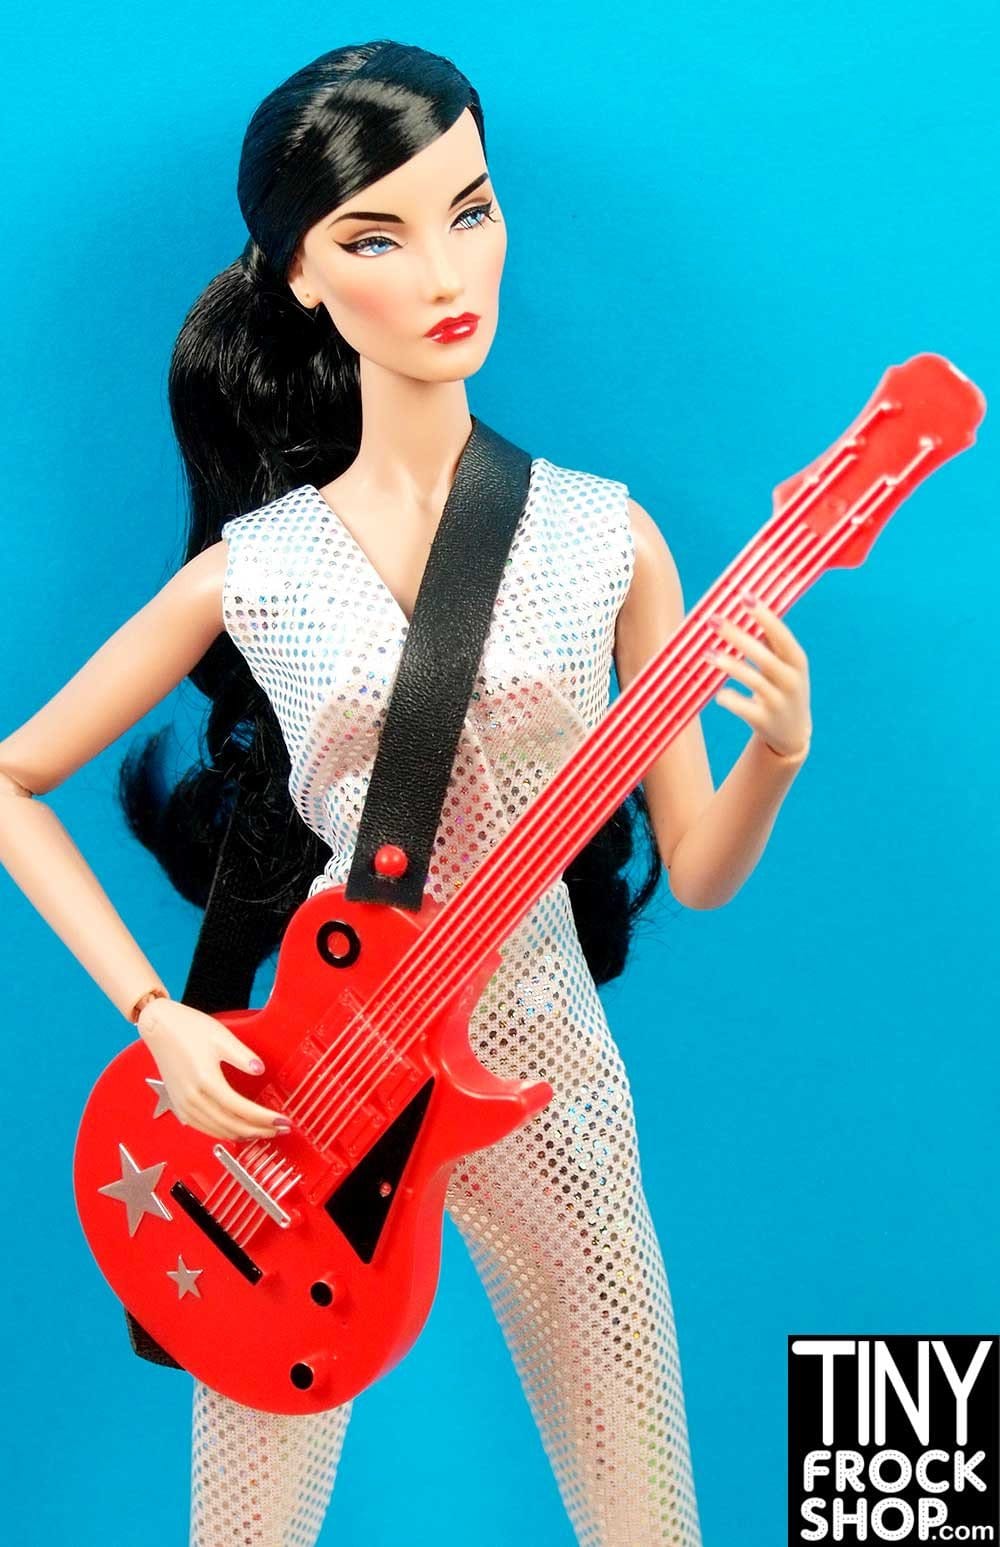 lastig Verdorie spion Tiny Frock Shop Ken or Barbie Avastars Red Star Guitar with Strap